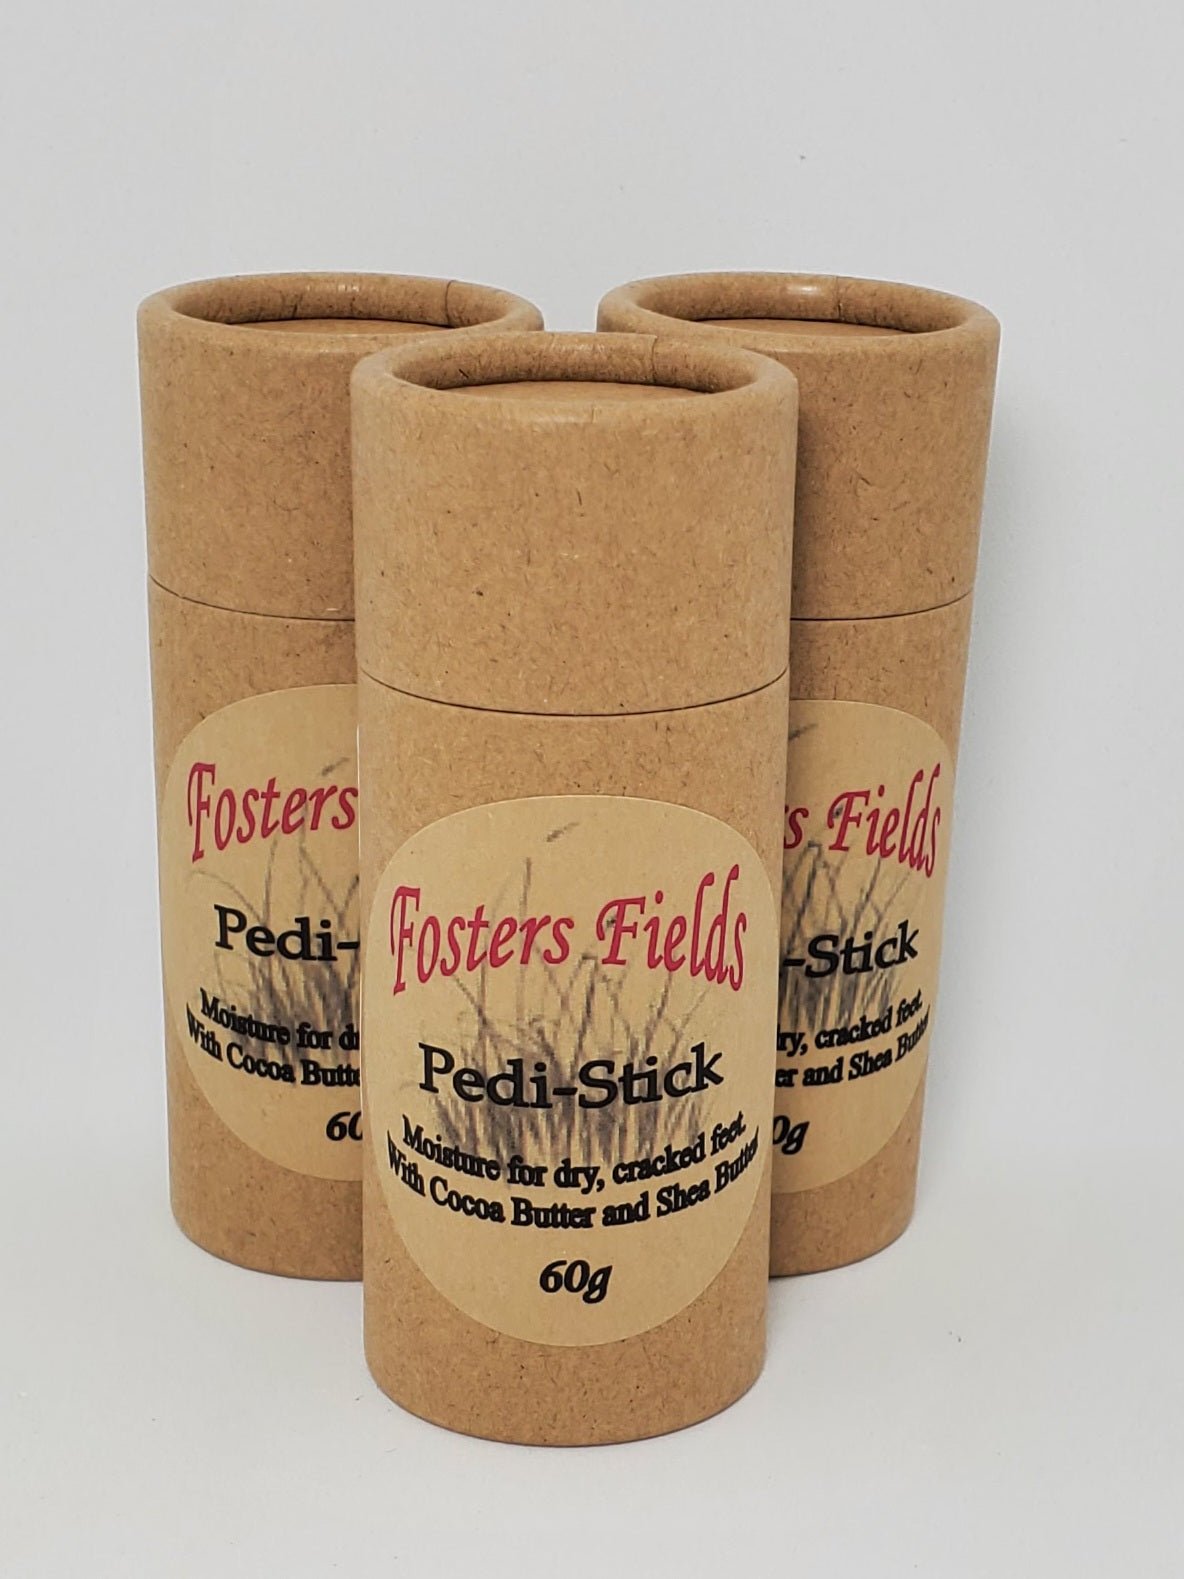 Pedi-Stick - FostersFields